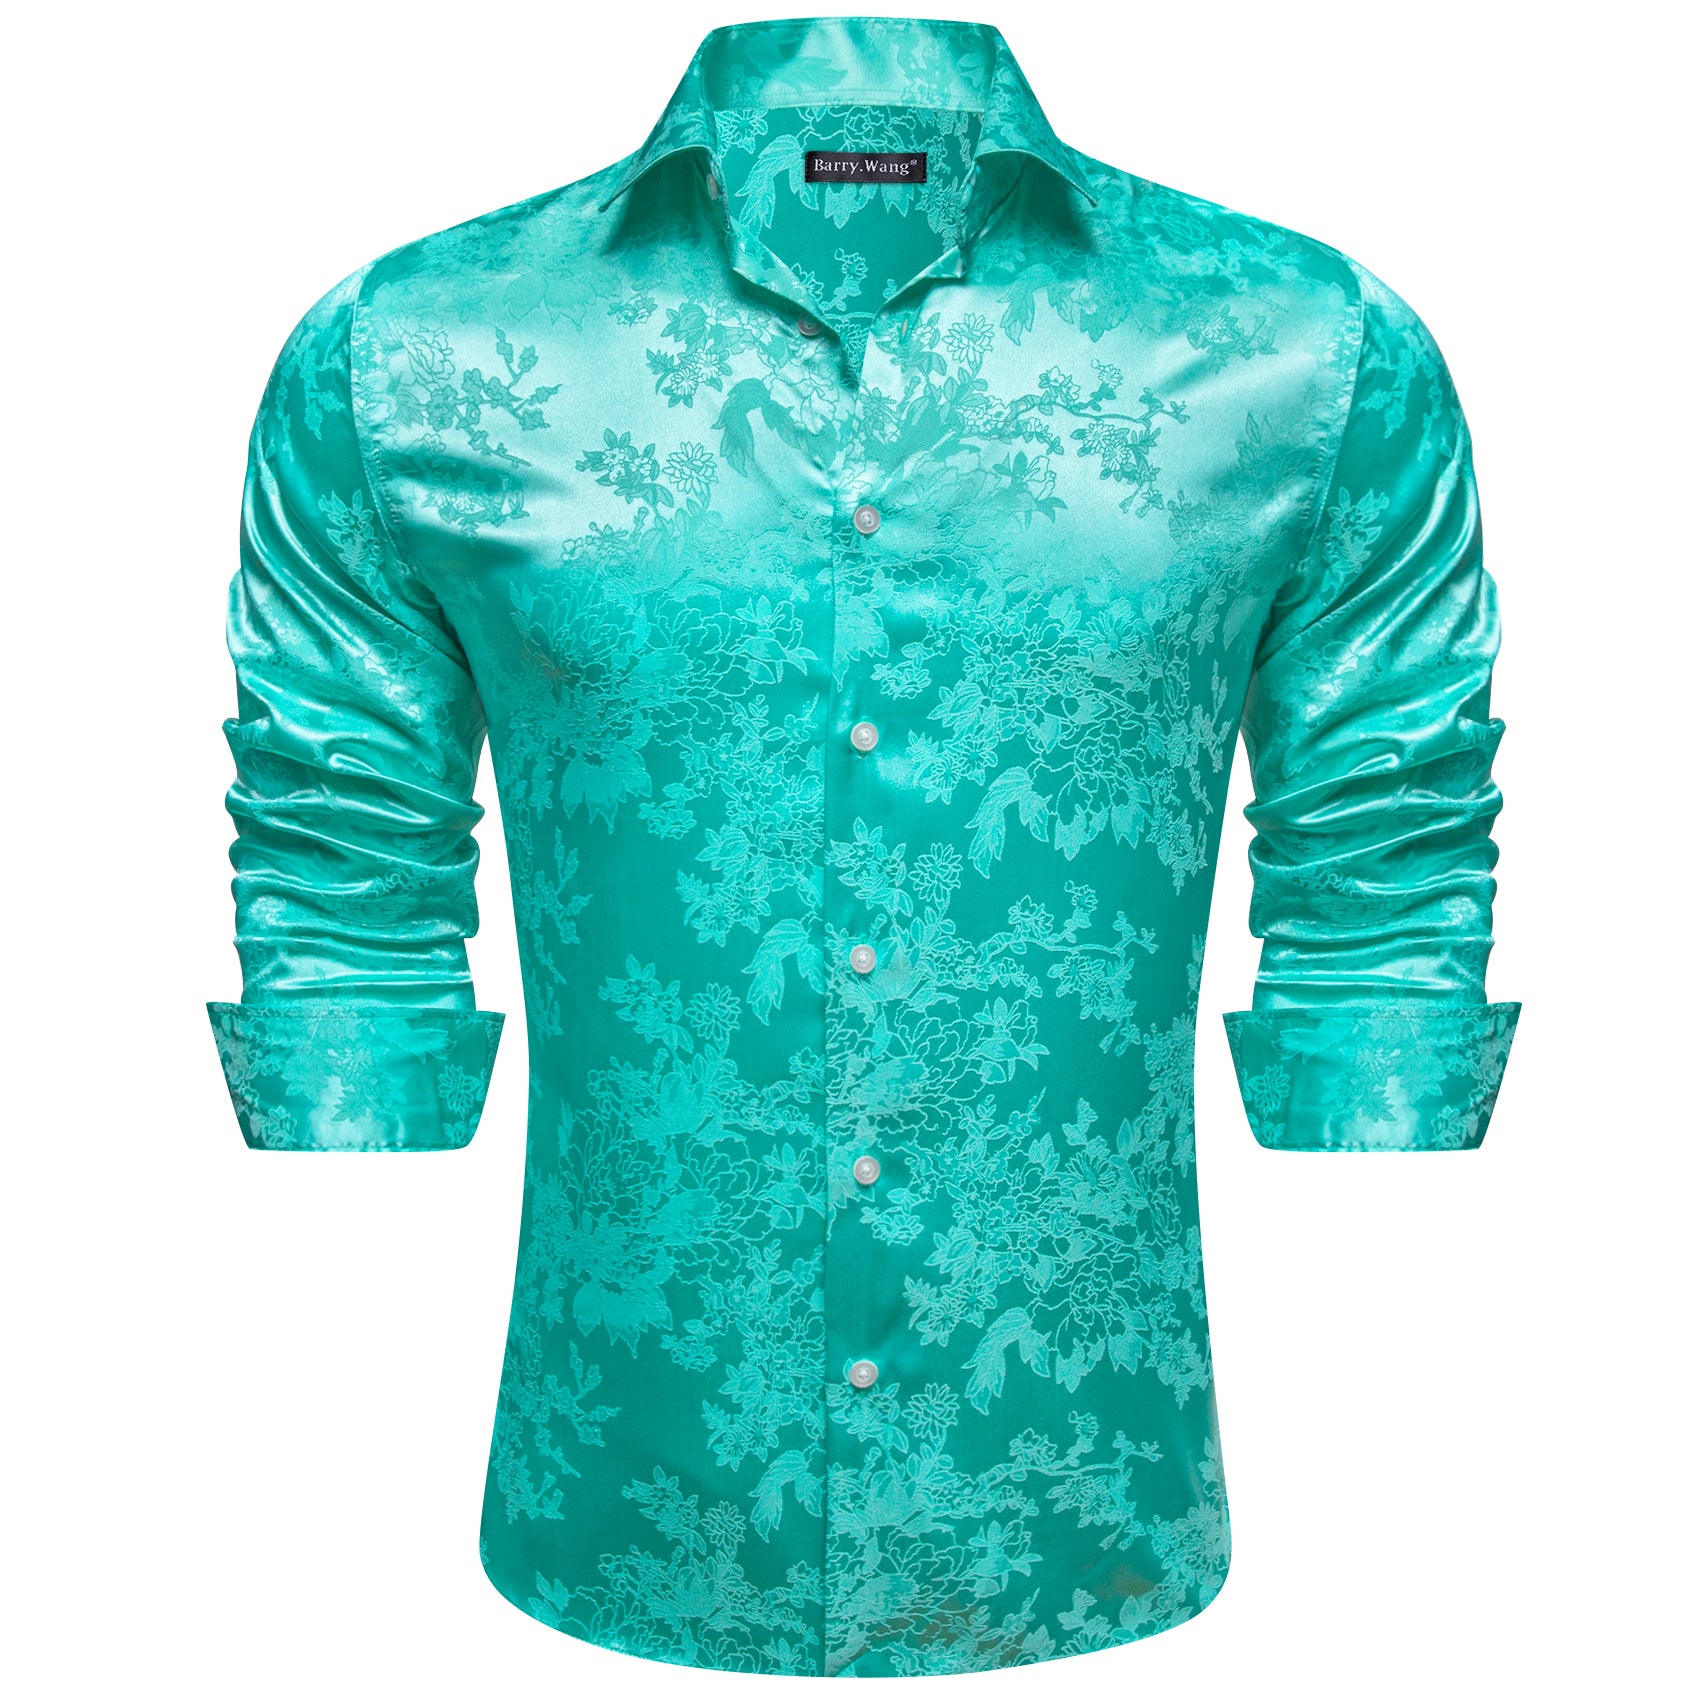 Barry.wang Aqua Floral Silk Men's Shirt